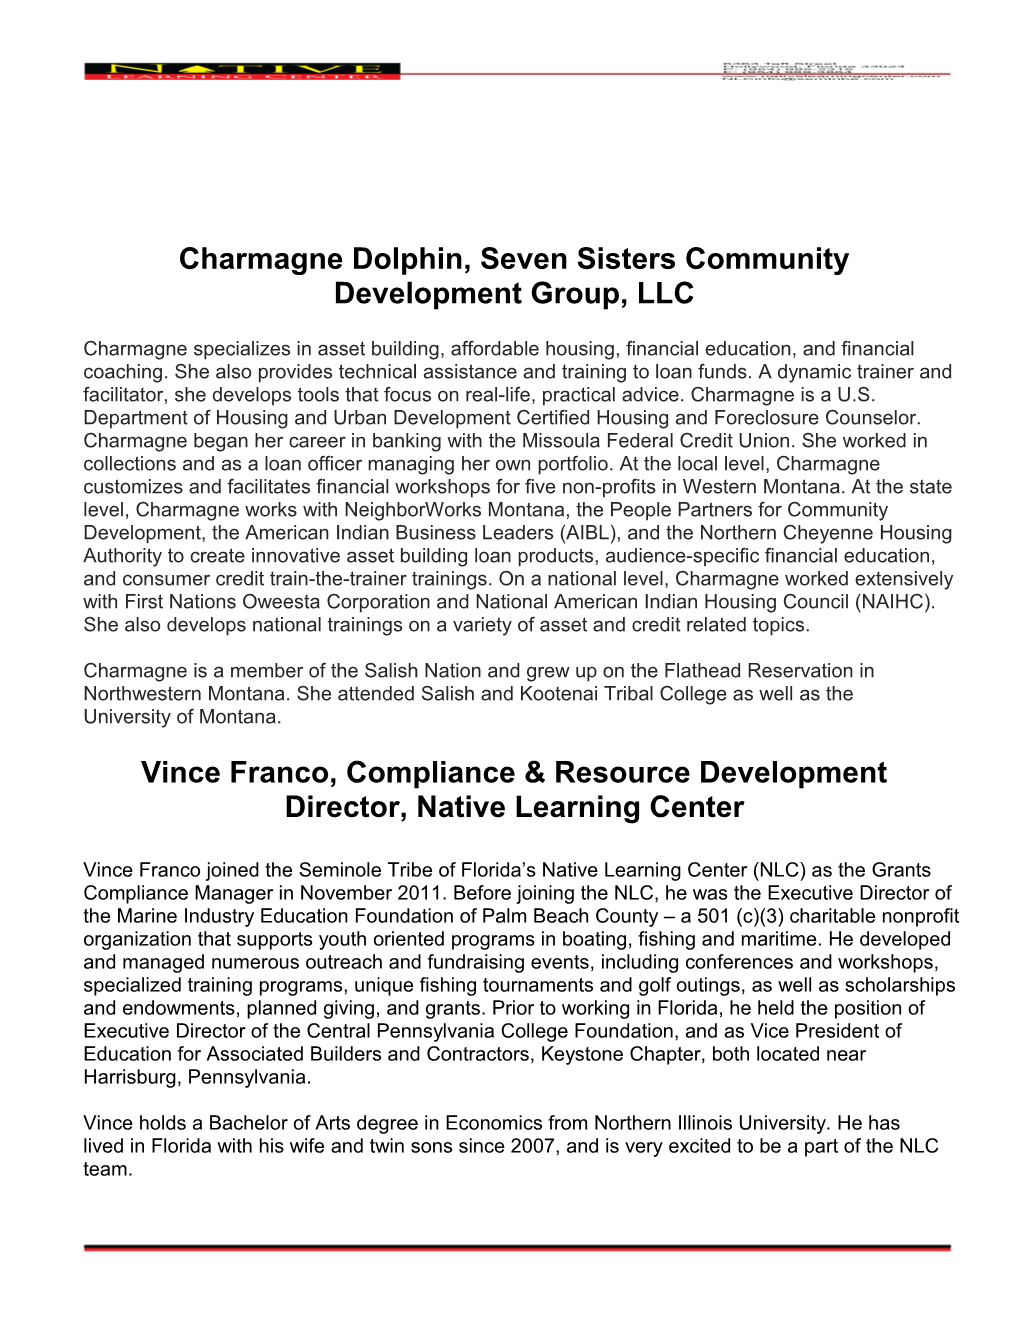 Charmagne Dolphin, Seven Sisters Community Development Group, LLC